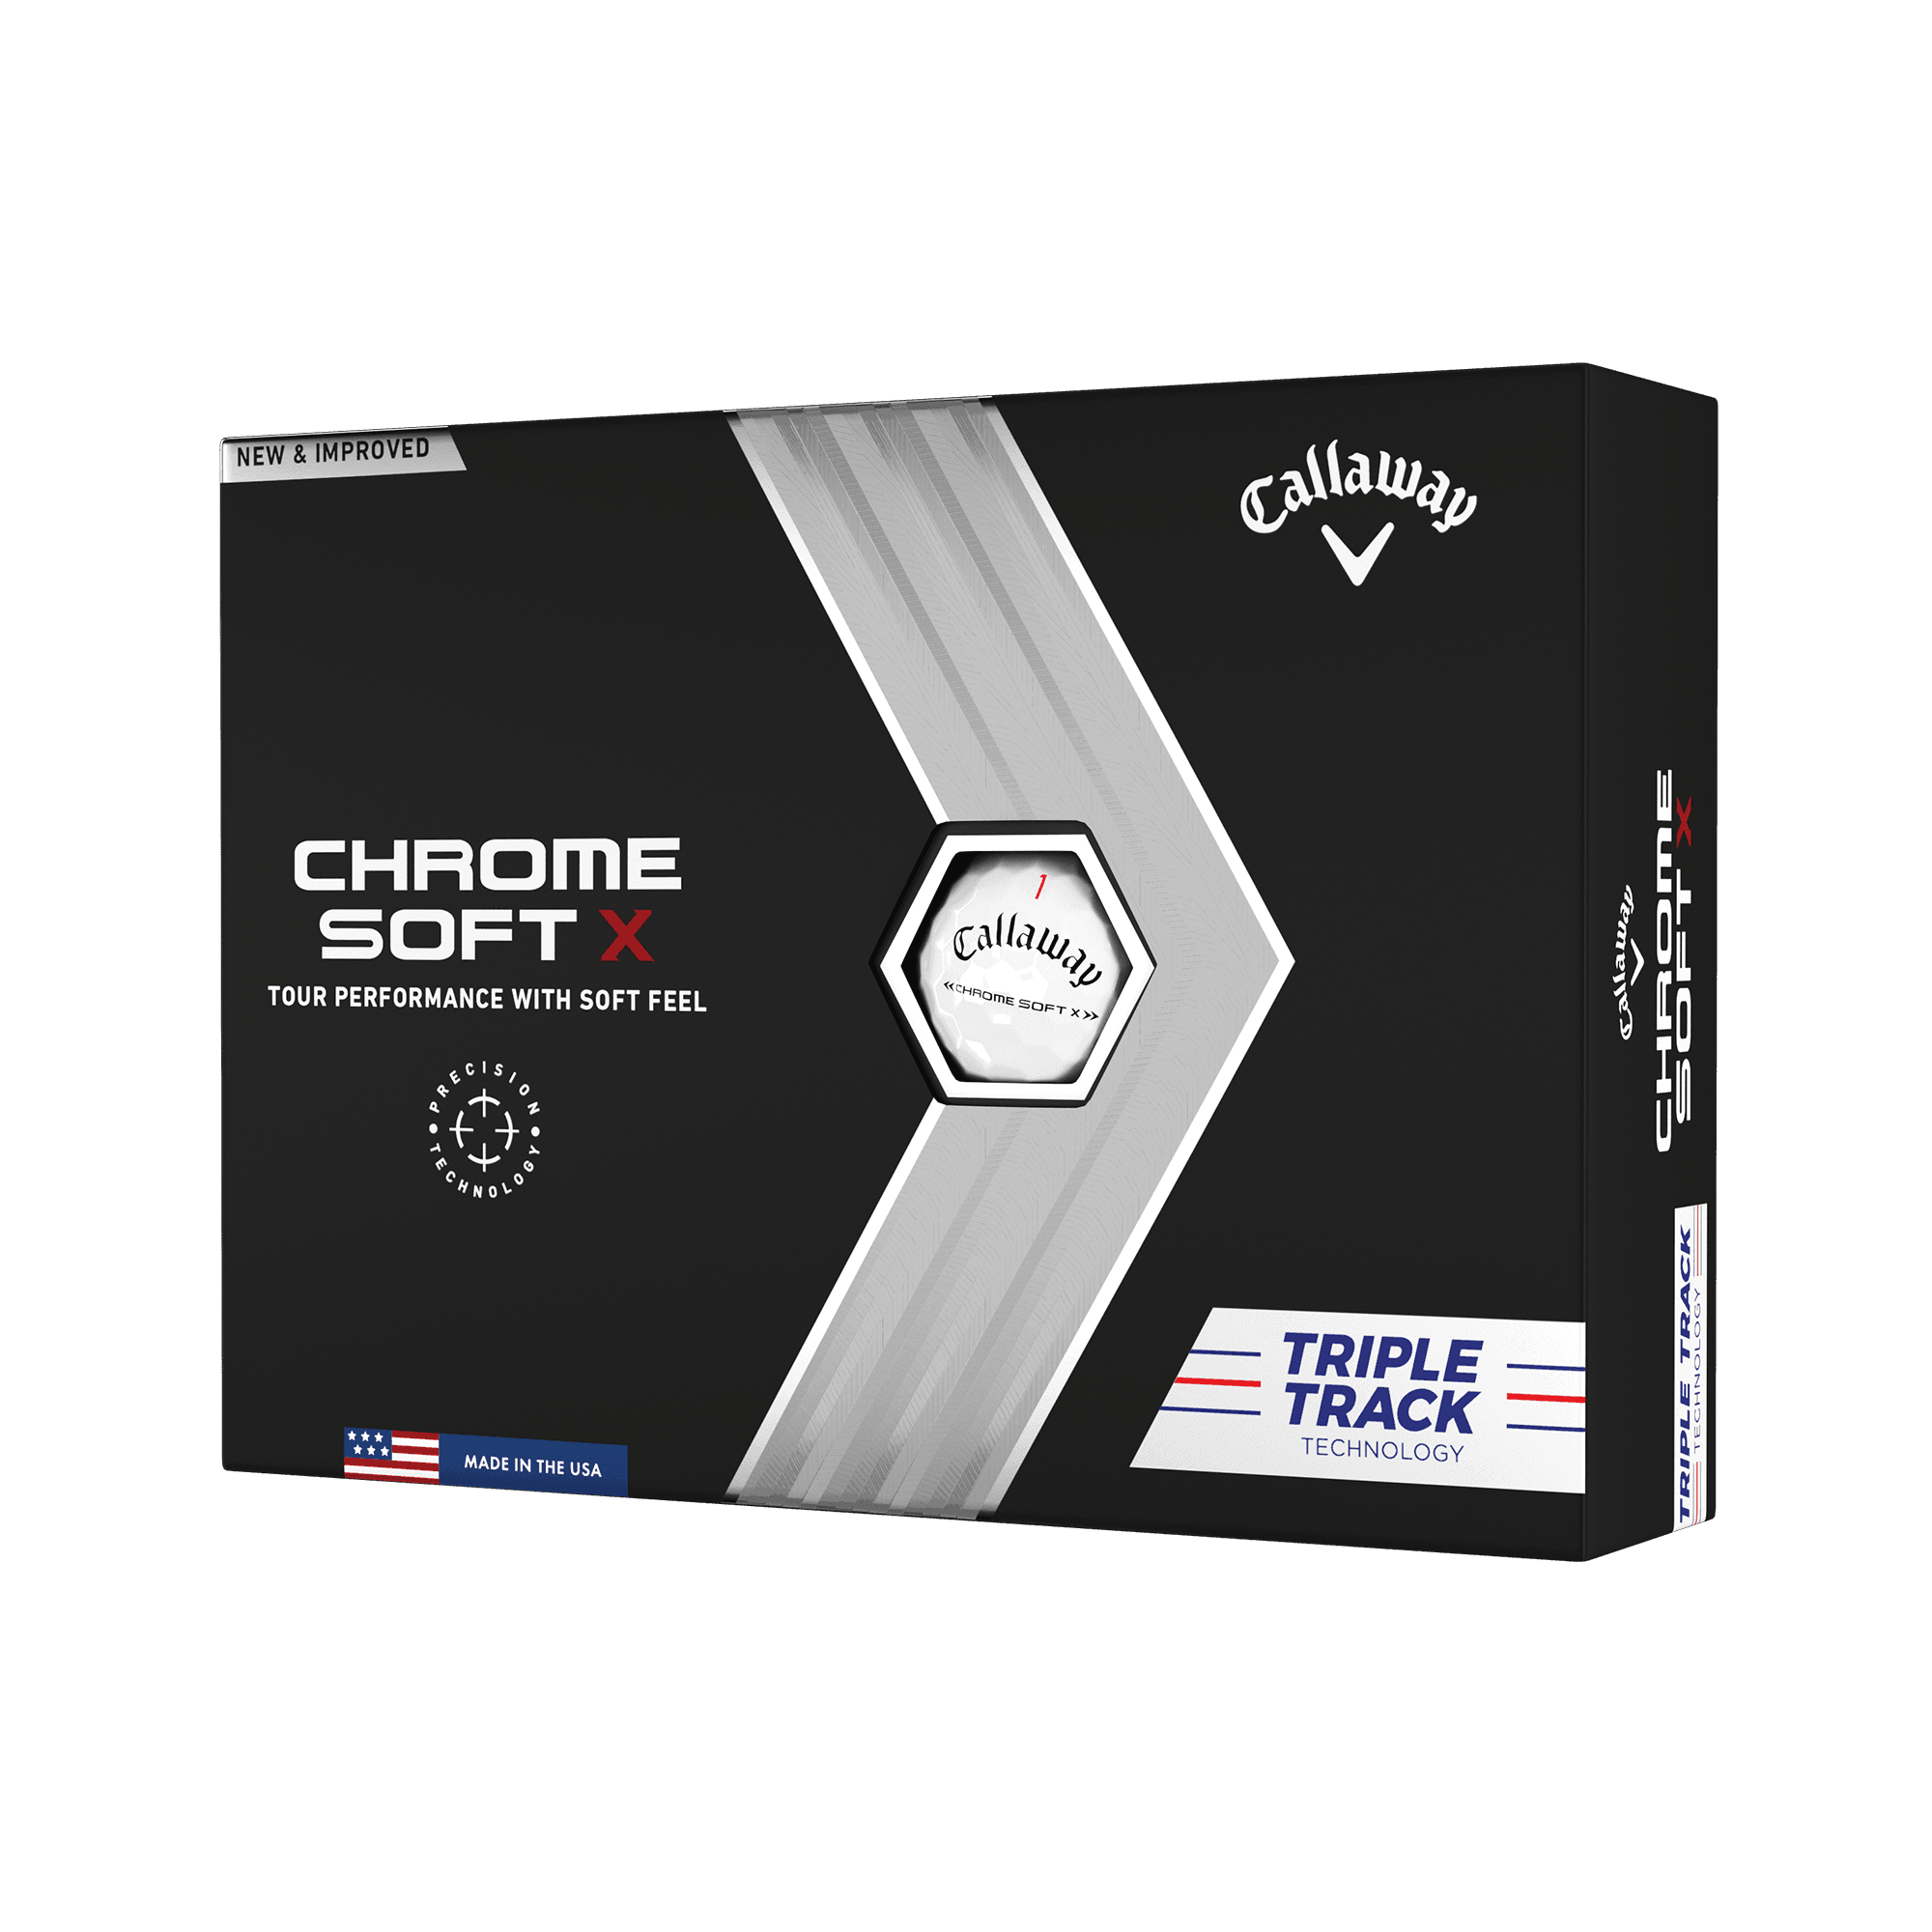 4pc Performance Plus Washcloths Dark Gray Striped - Threshold™